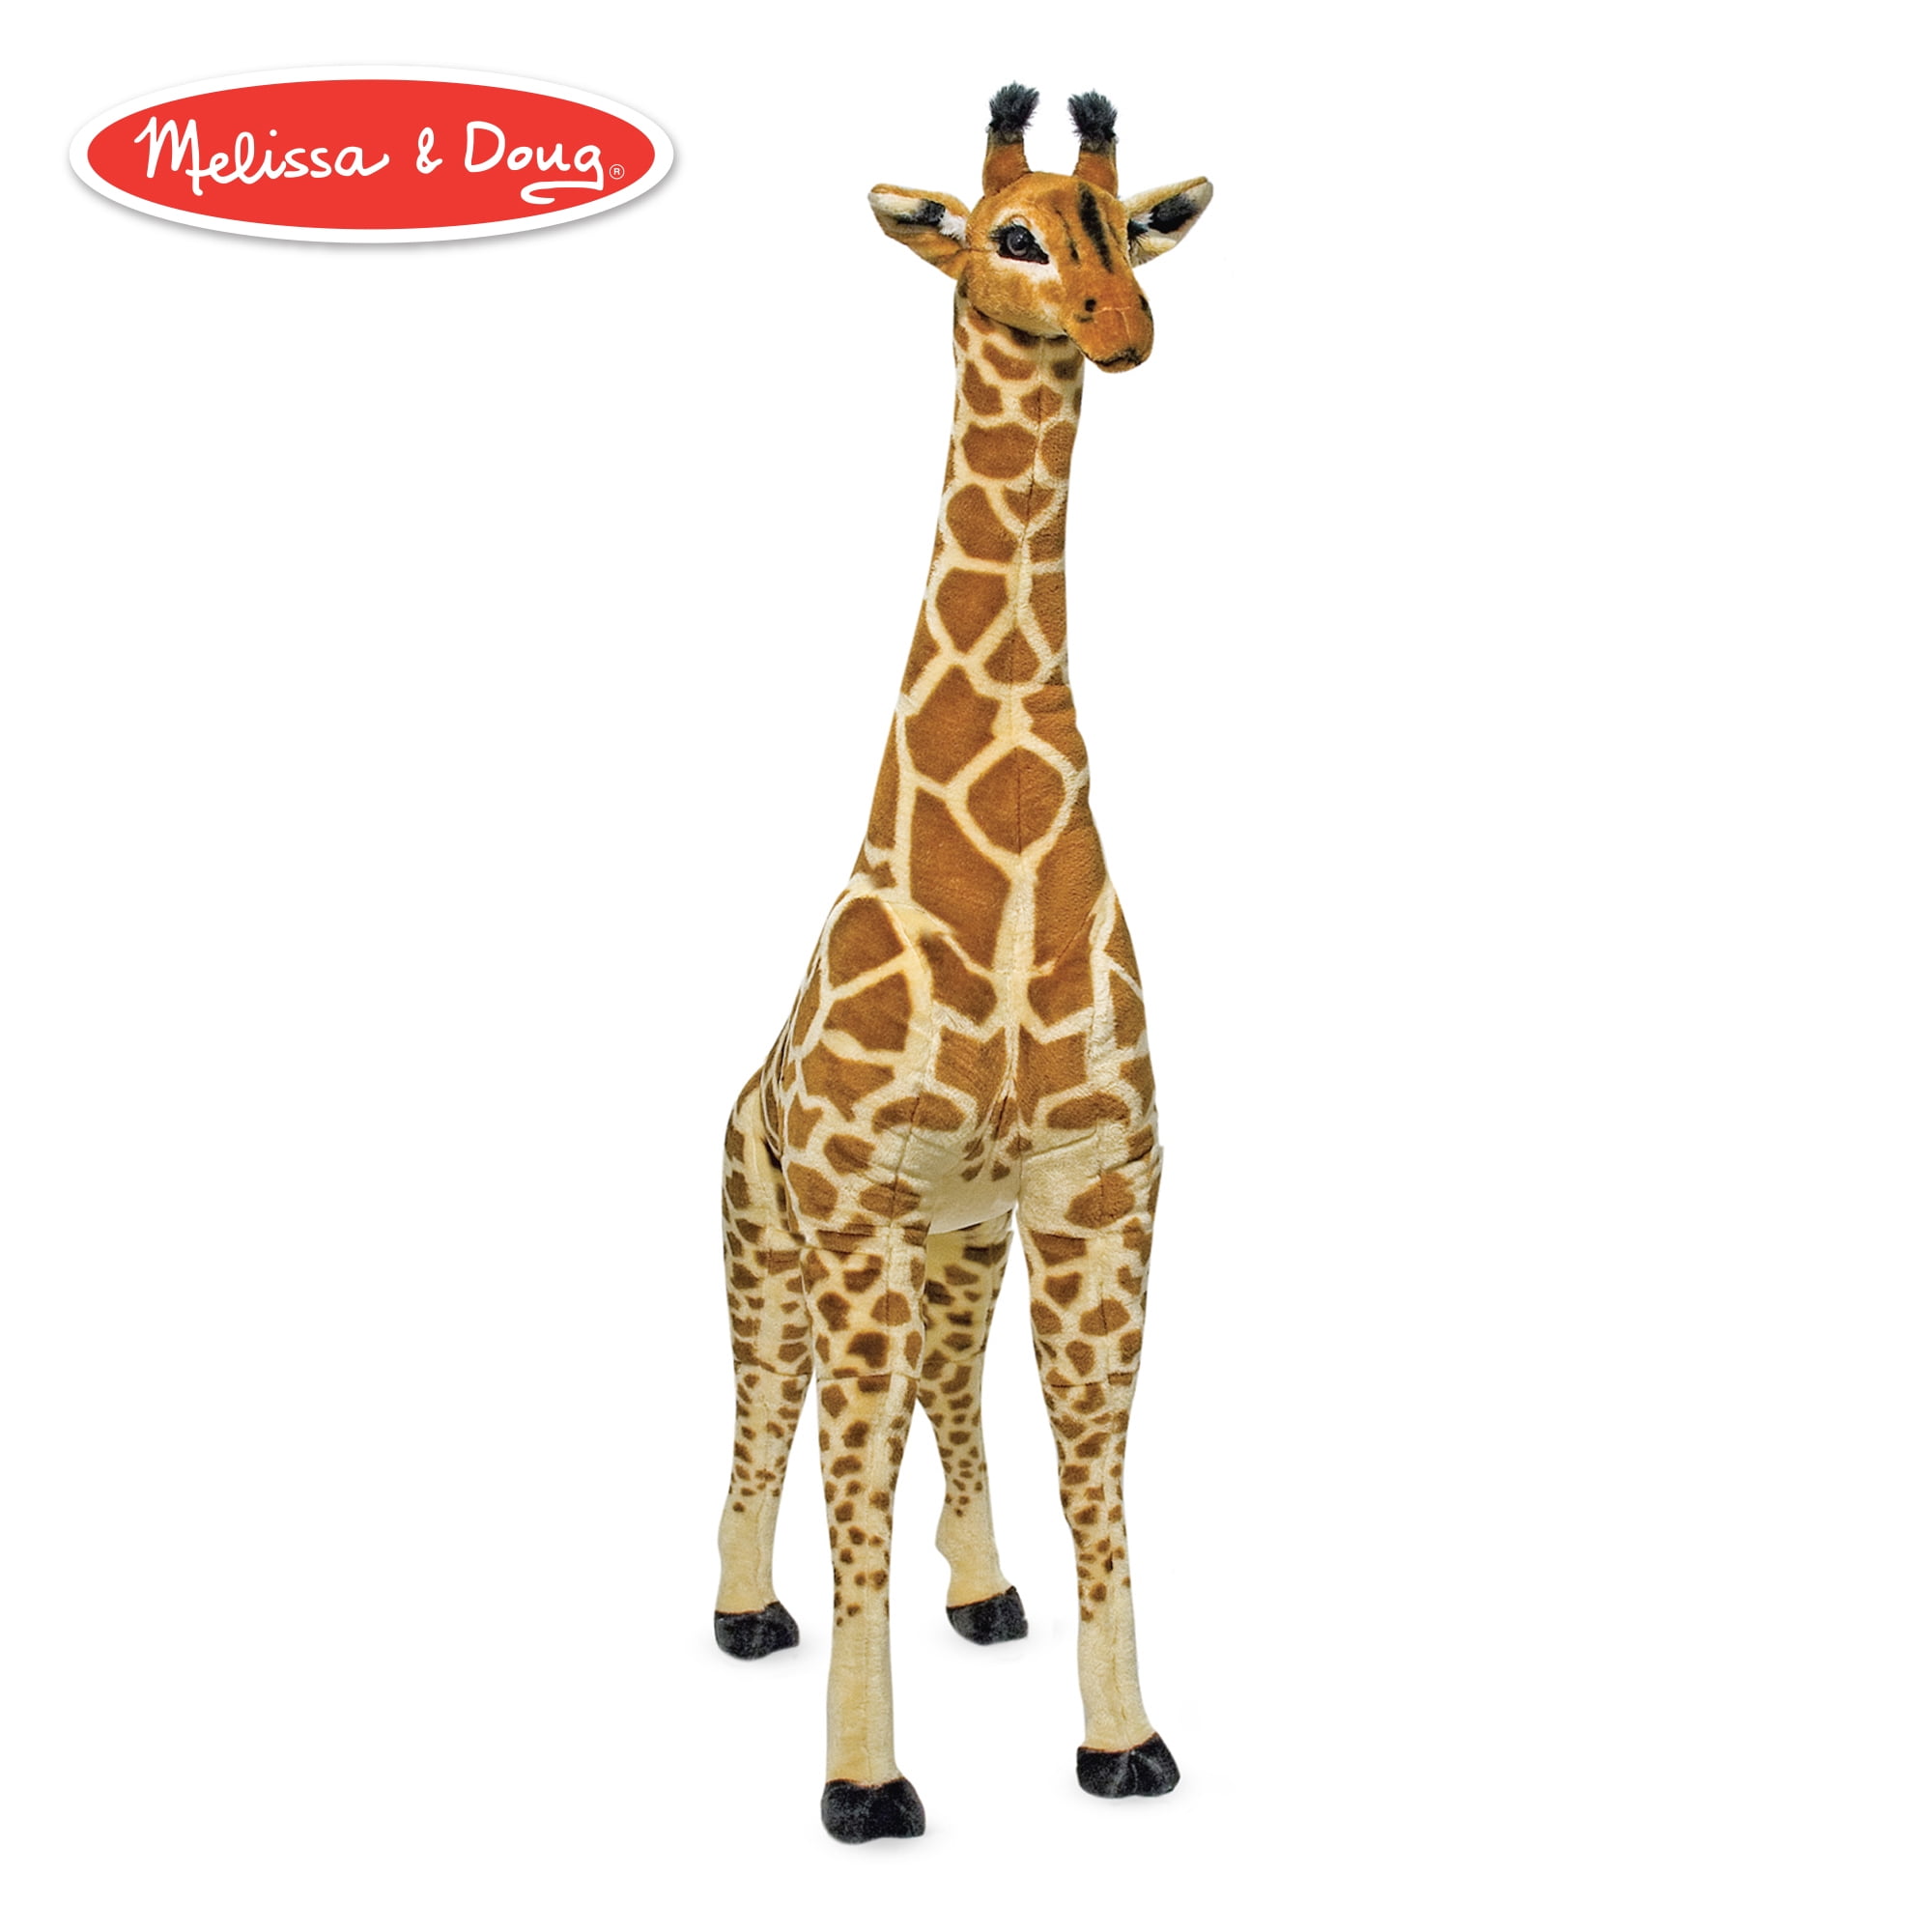 Melissa \u0026 Doug Large Giraffe - Walmart 